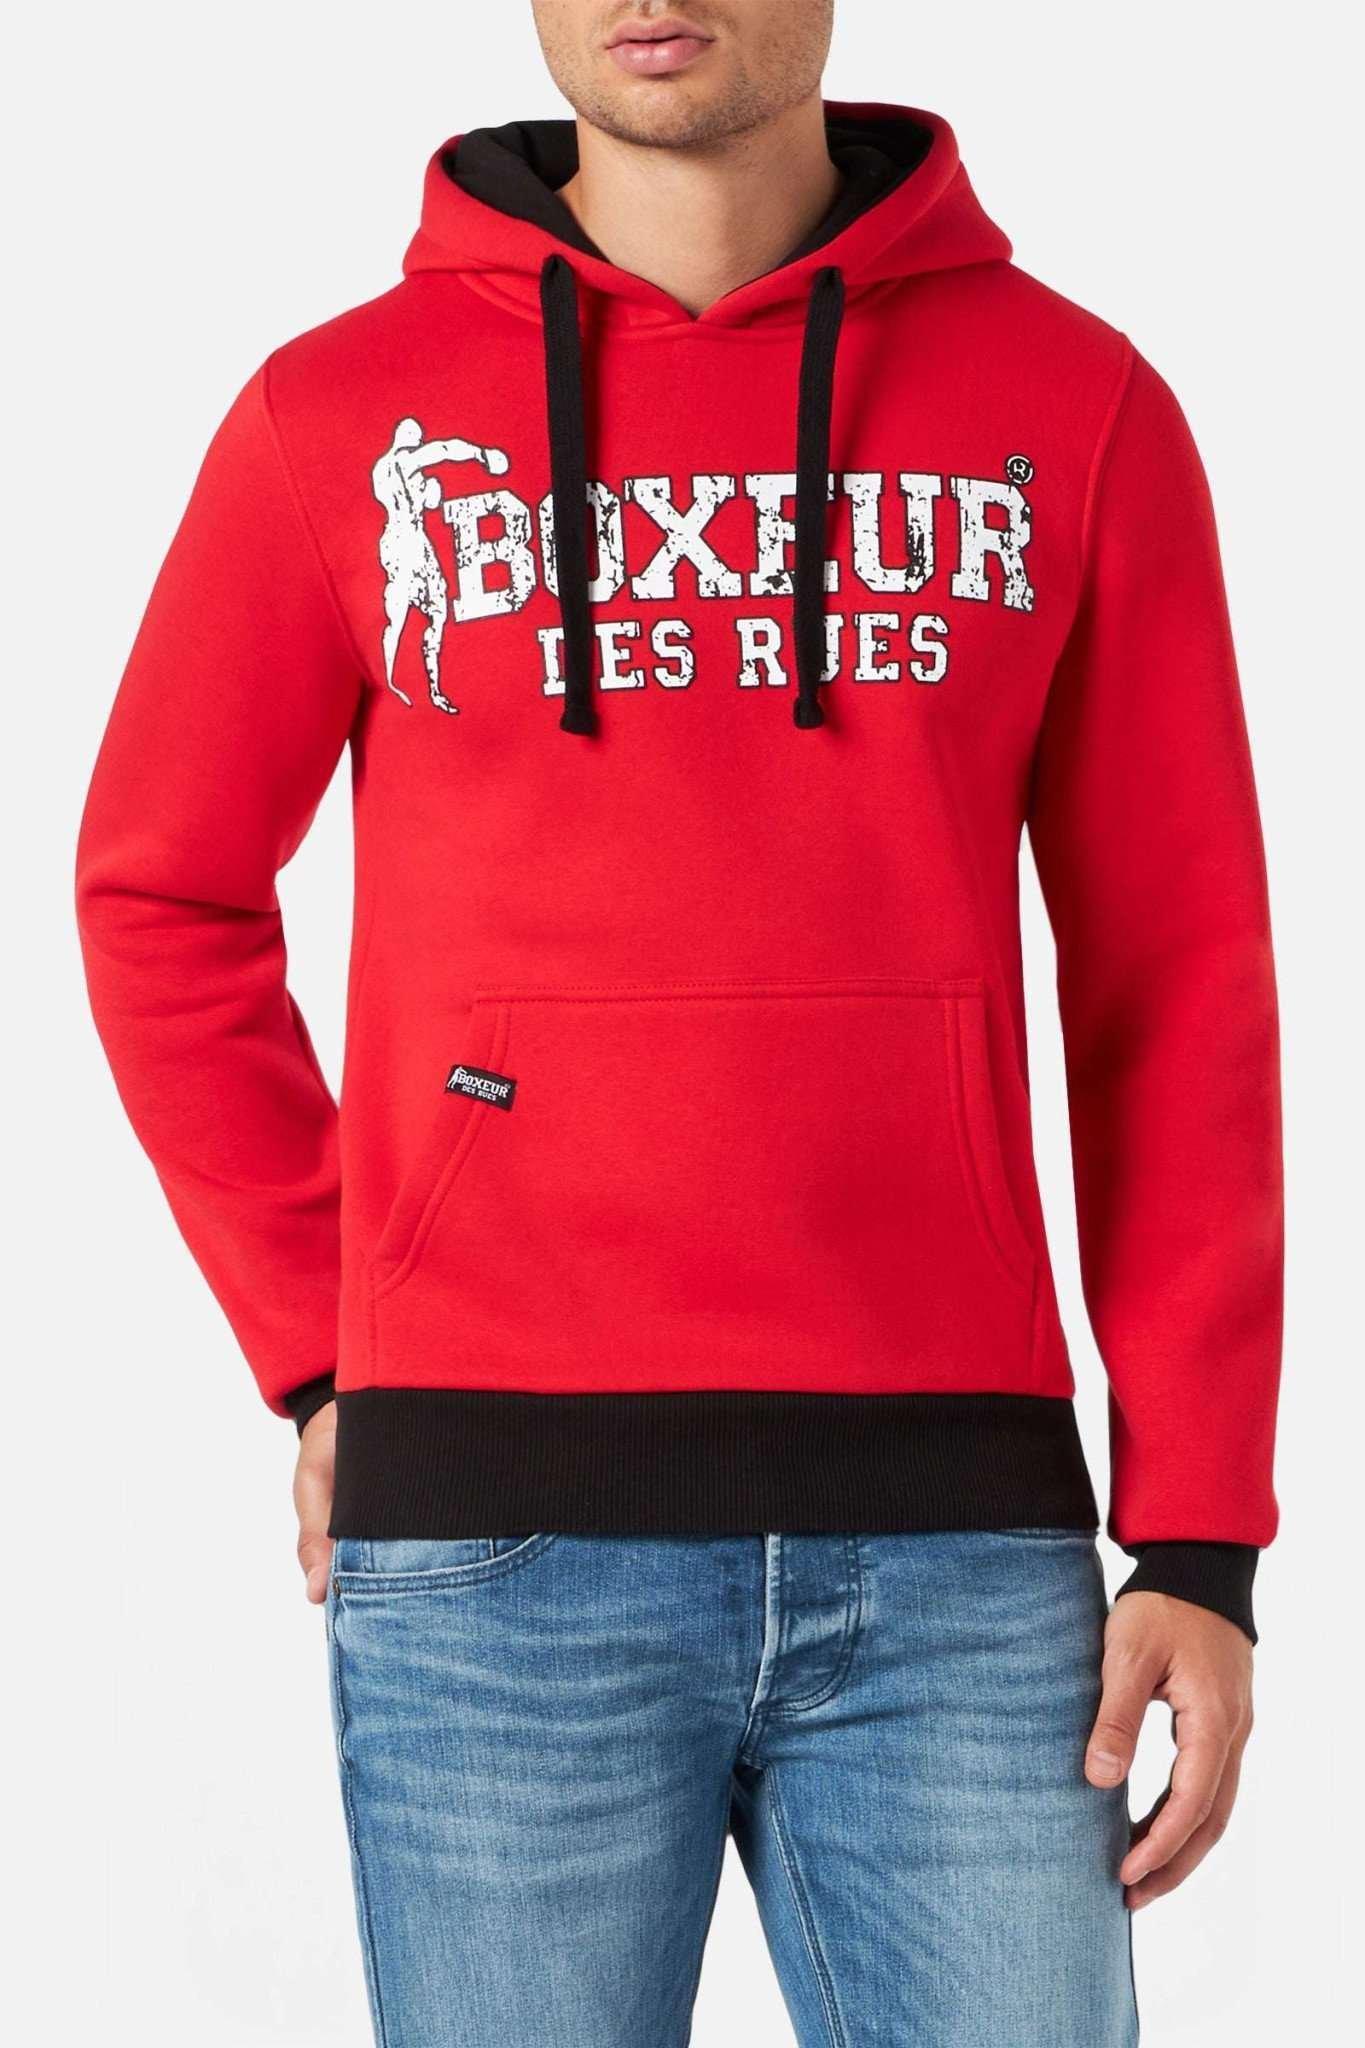 Sweatshirts Man Hoodie Sweatshirt Herren Rot Bunt XL von BOXEUR DES RUES